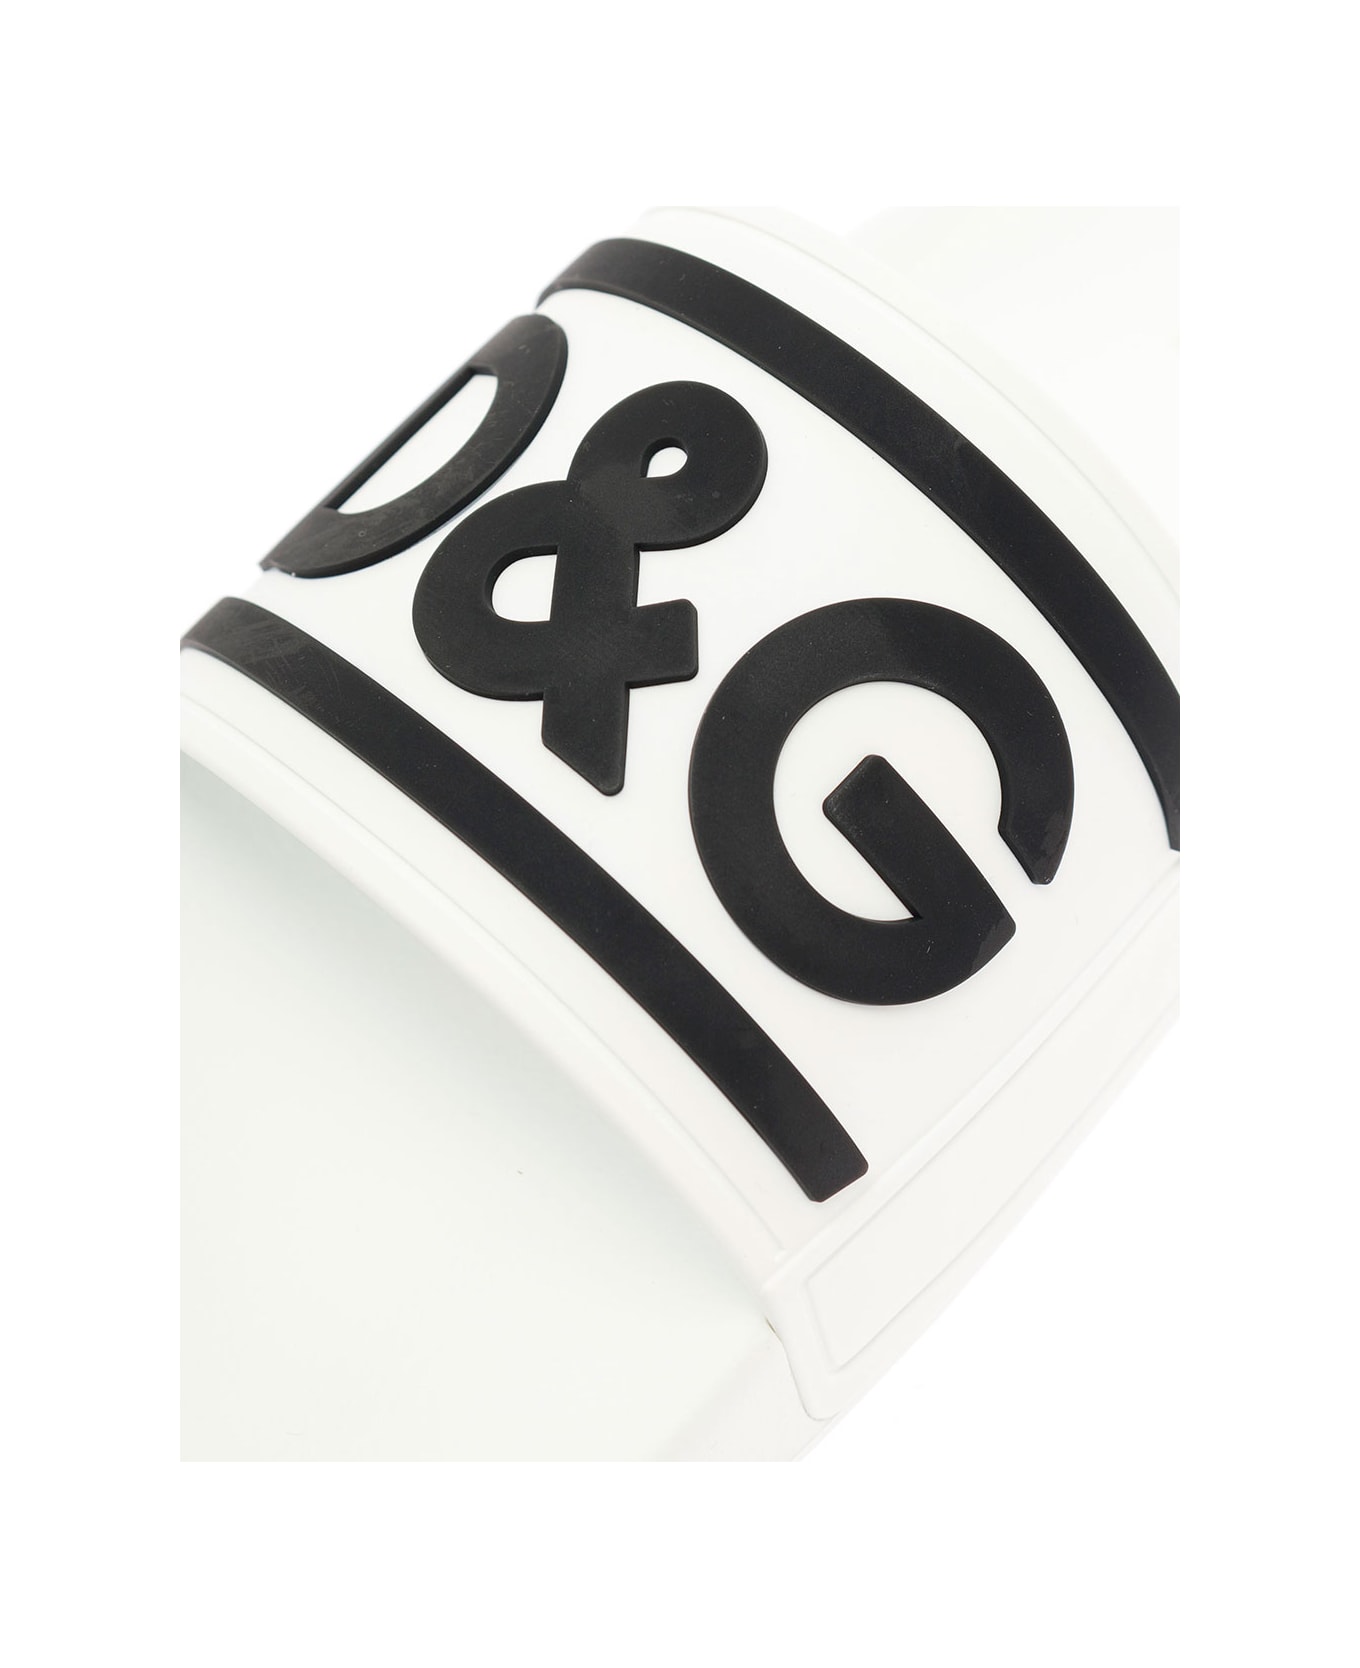 Dolce & Gabbana White Pool Slide In Rubber With Embossed Logo Dolce& Gabbana Man - White/black